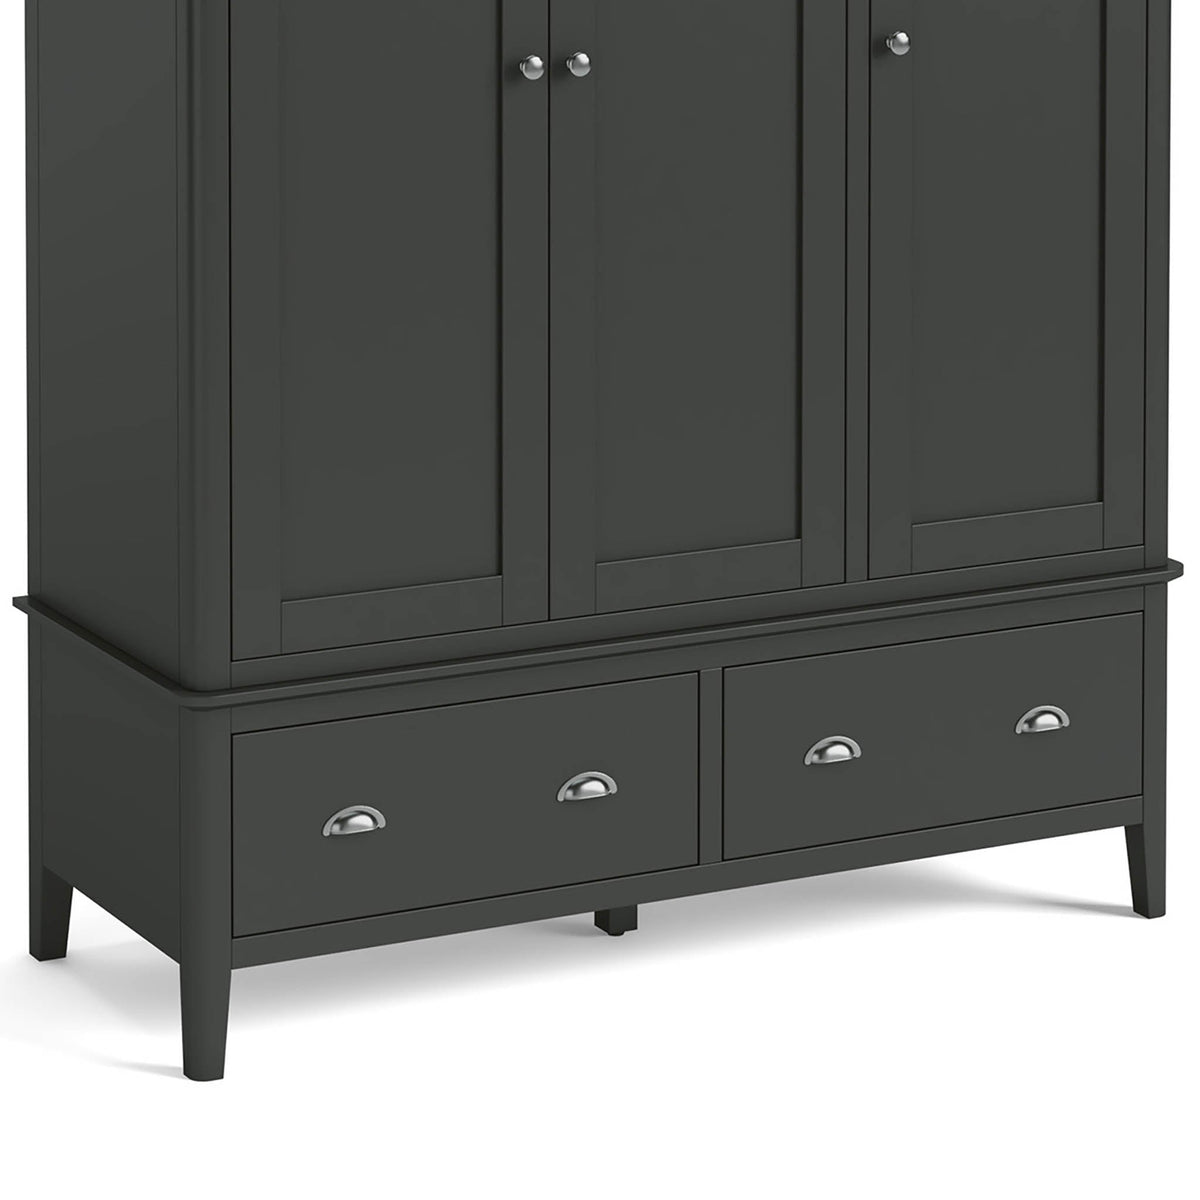 Dumbarton Charcoal Grey 3 Door Triple Wardrobe - Close up of lower storage drawers